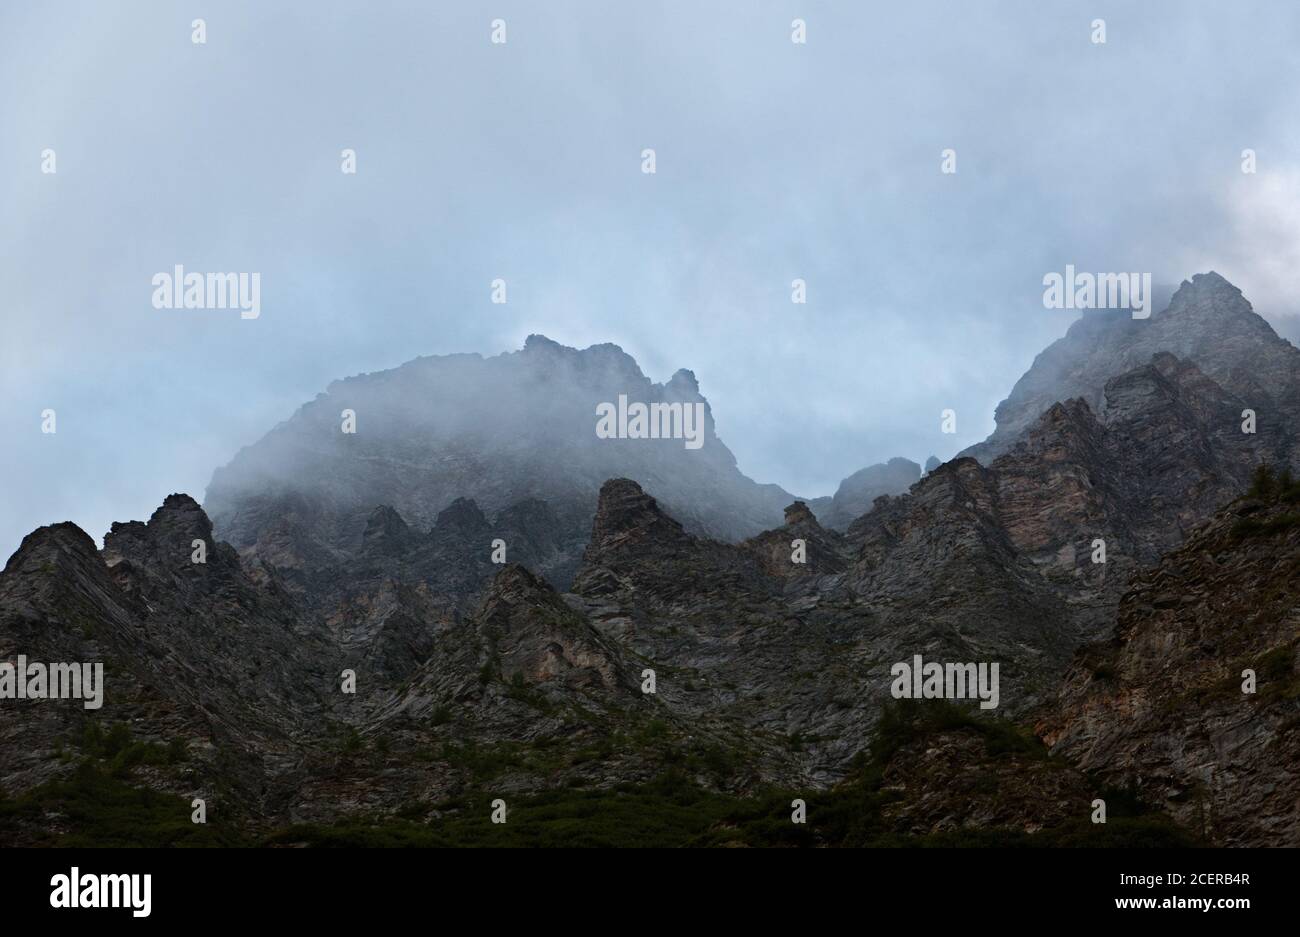 Creepy, steep rocks in a misty, scary landscape Stock Photo